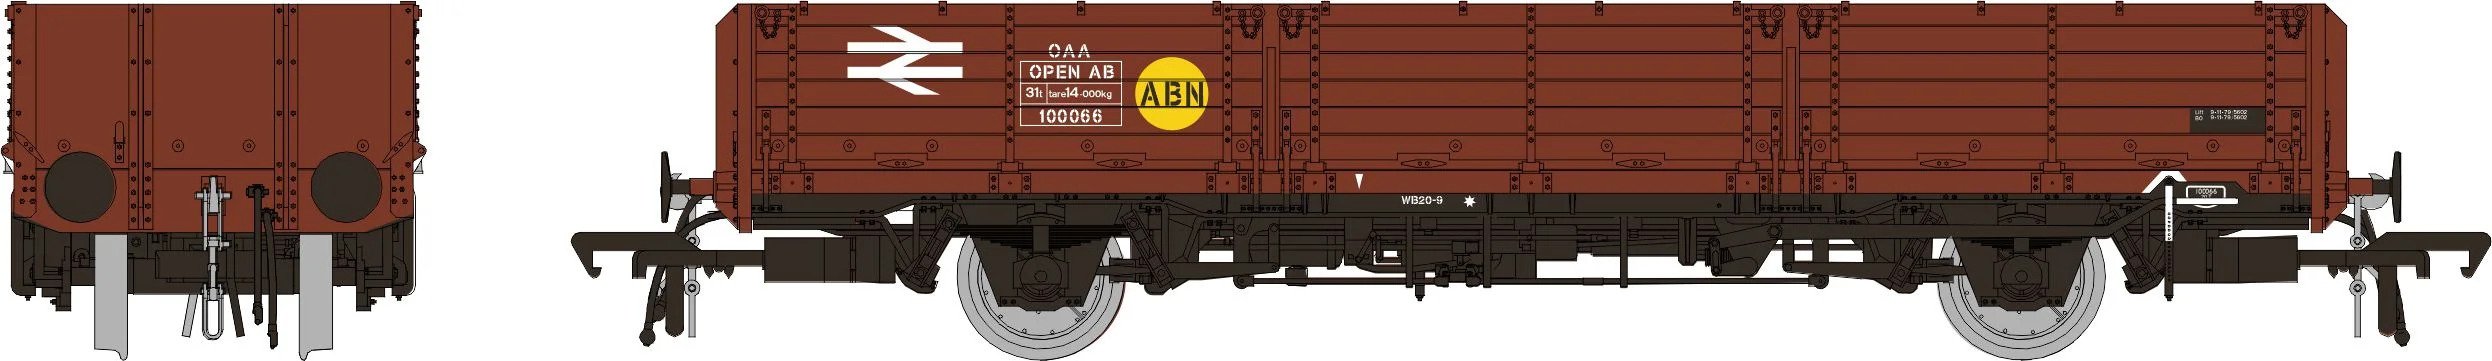 Rapido Trains 915004 OAA No. 100066, BR bauxite